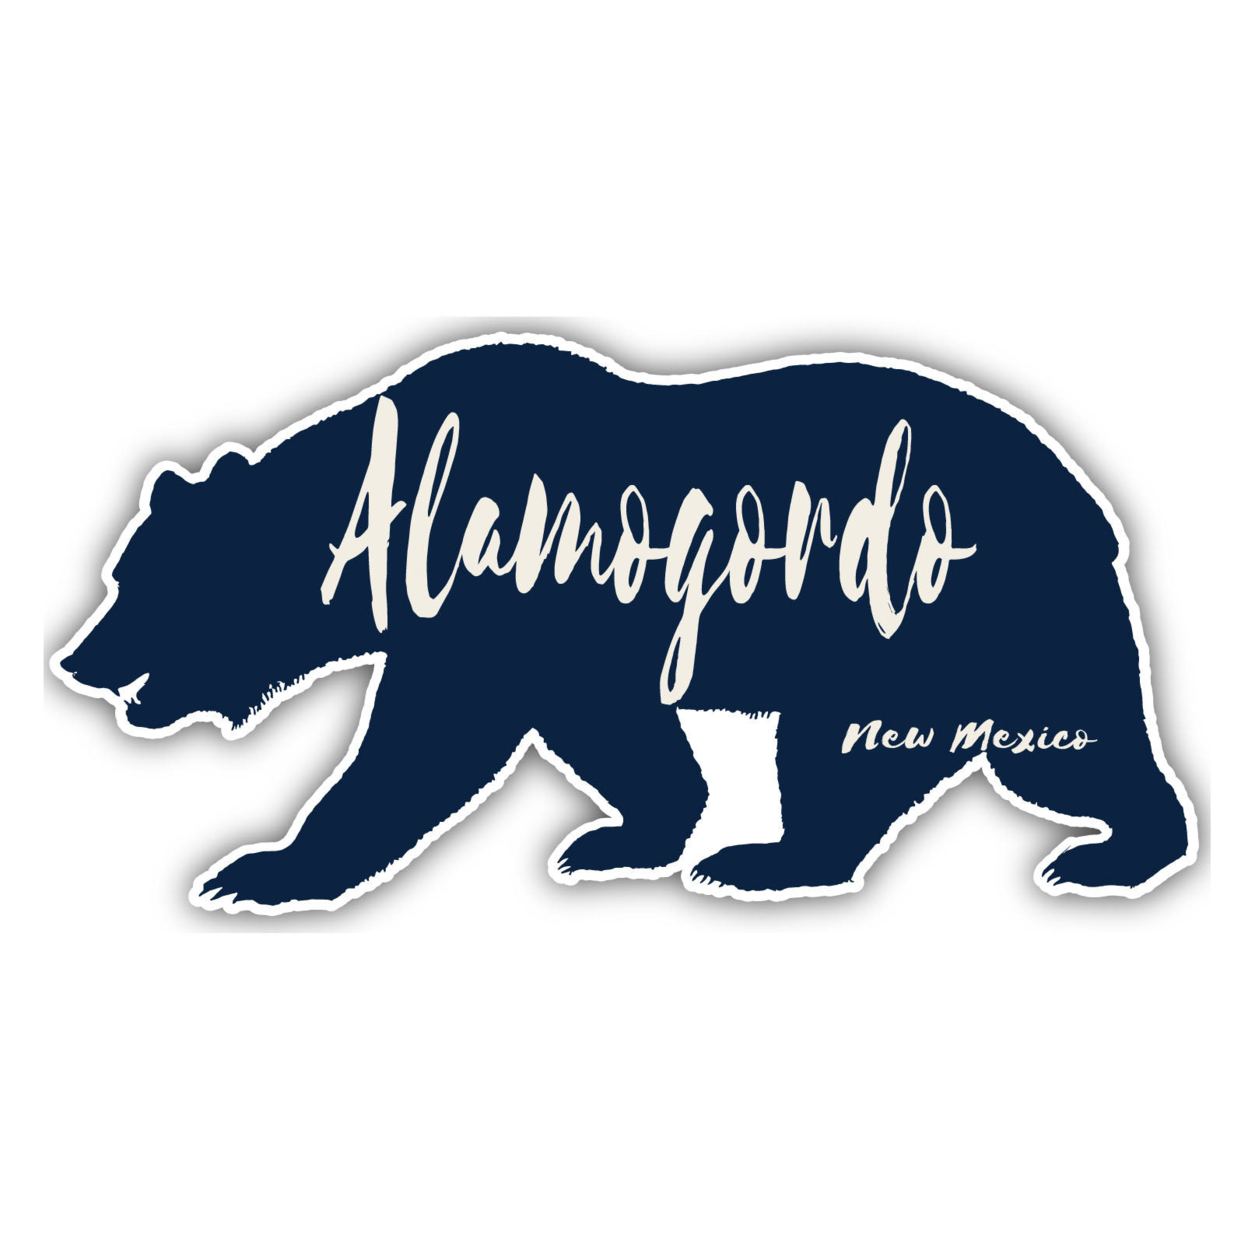 Alamogordo New Mexico Souvenir Decorative Stickers (Choose Theme And Size) - Single Unit, 8-Inch, Bear